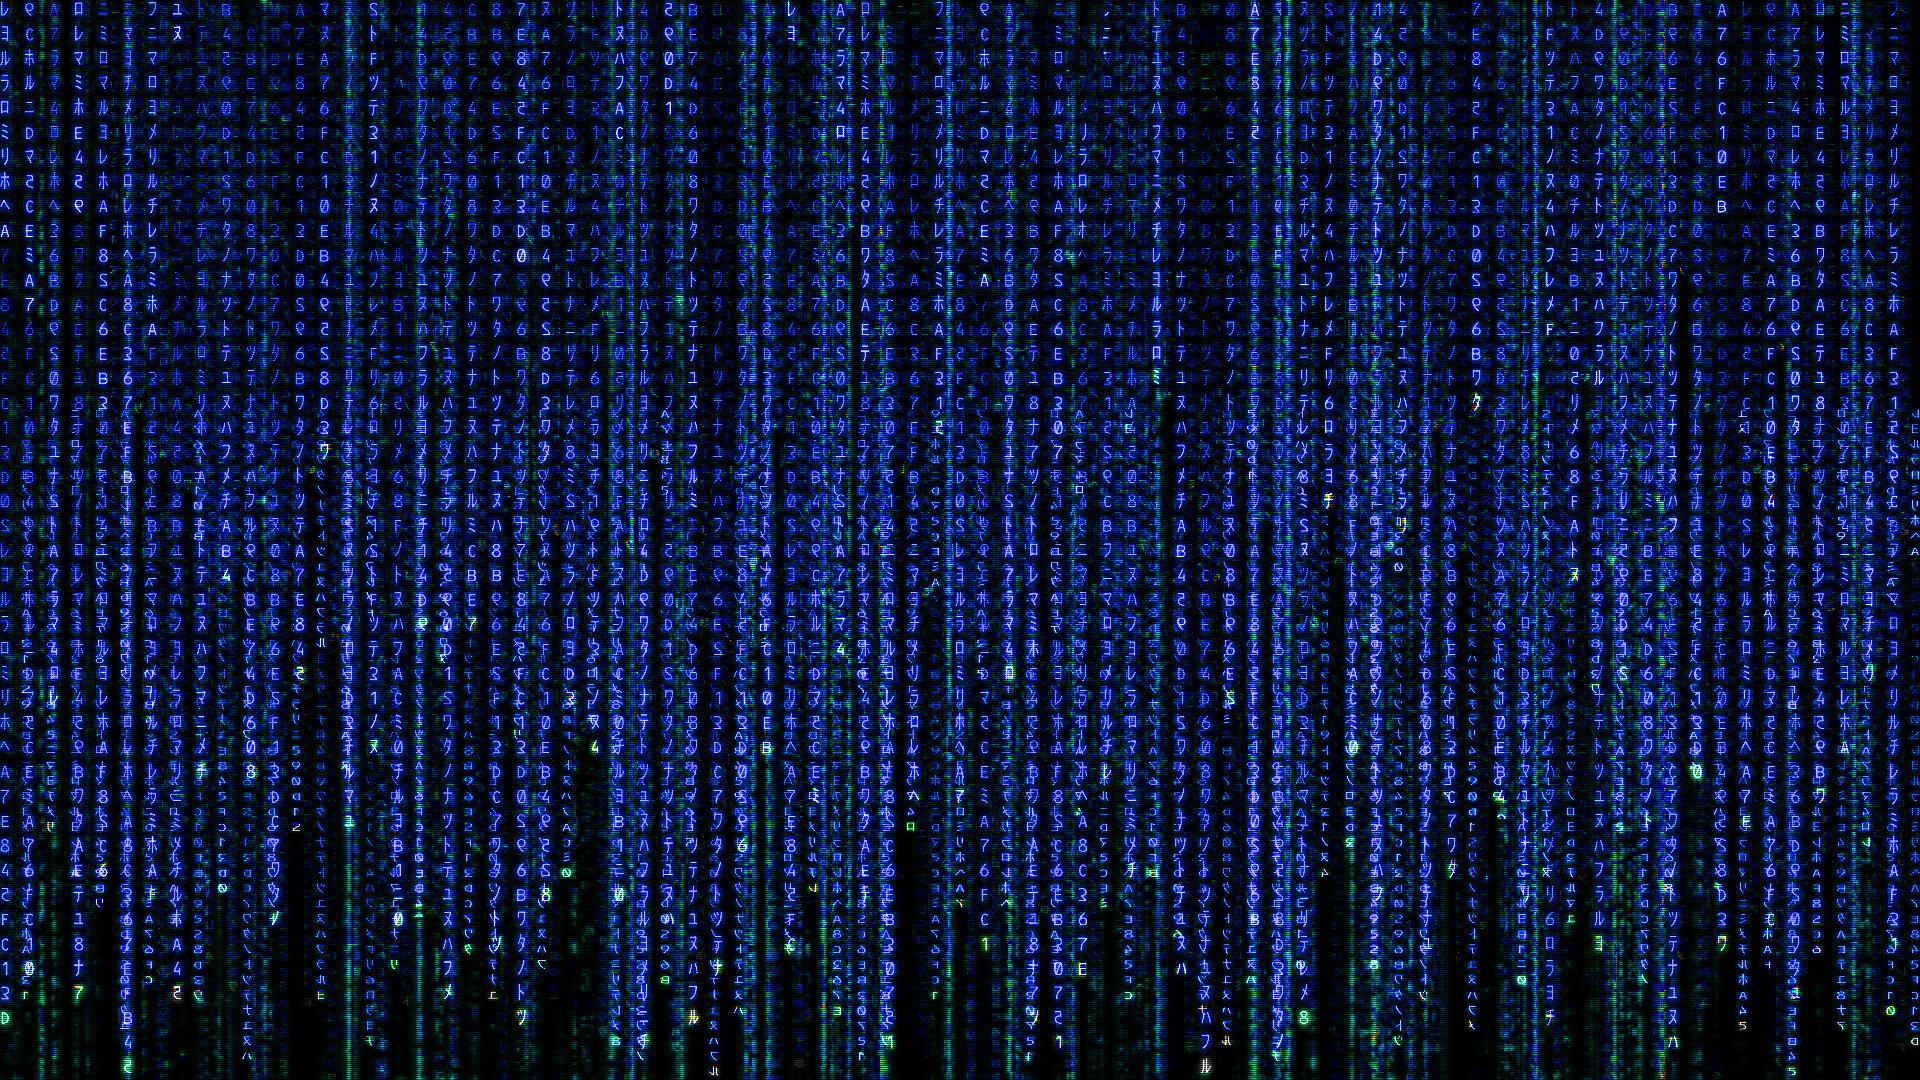 Puter Engineering Science Tech Matrix Wallpaper Background